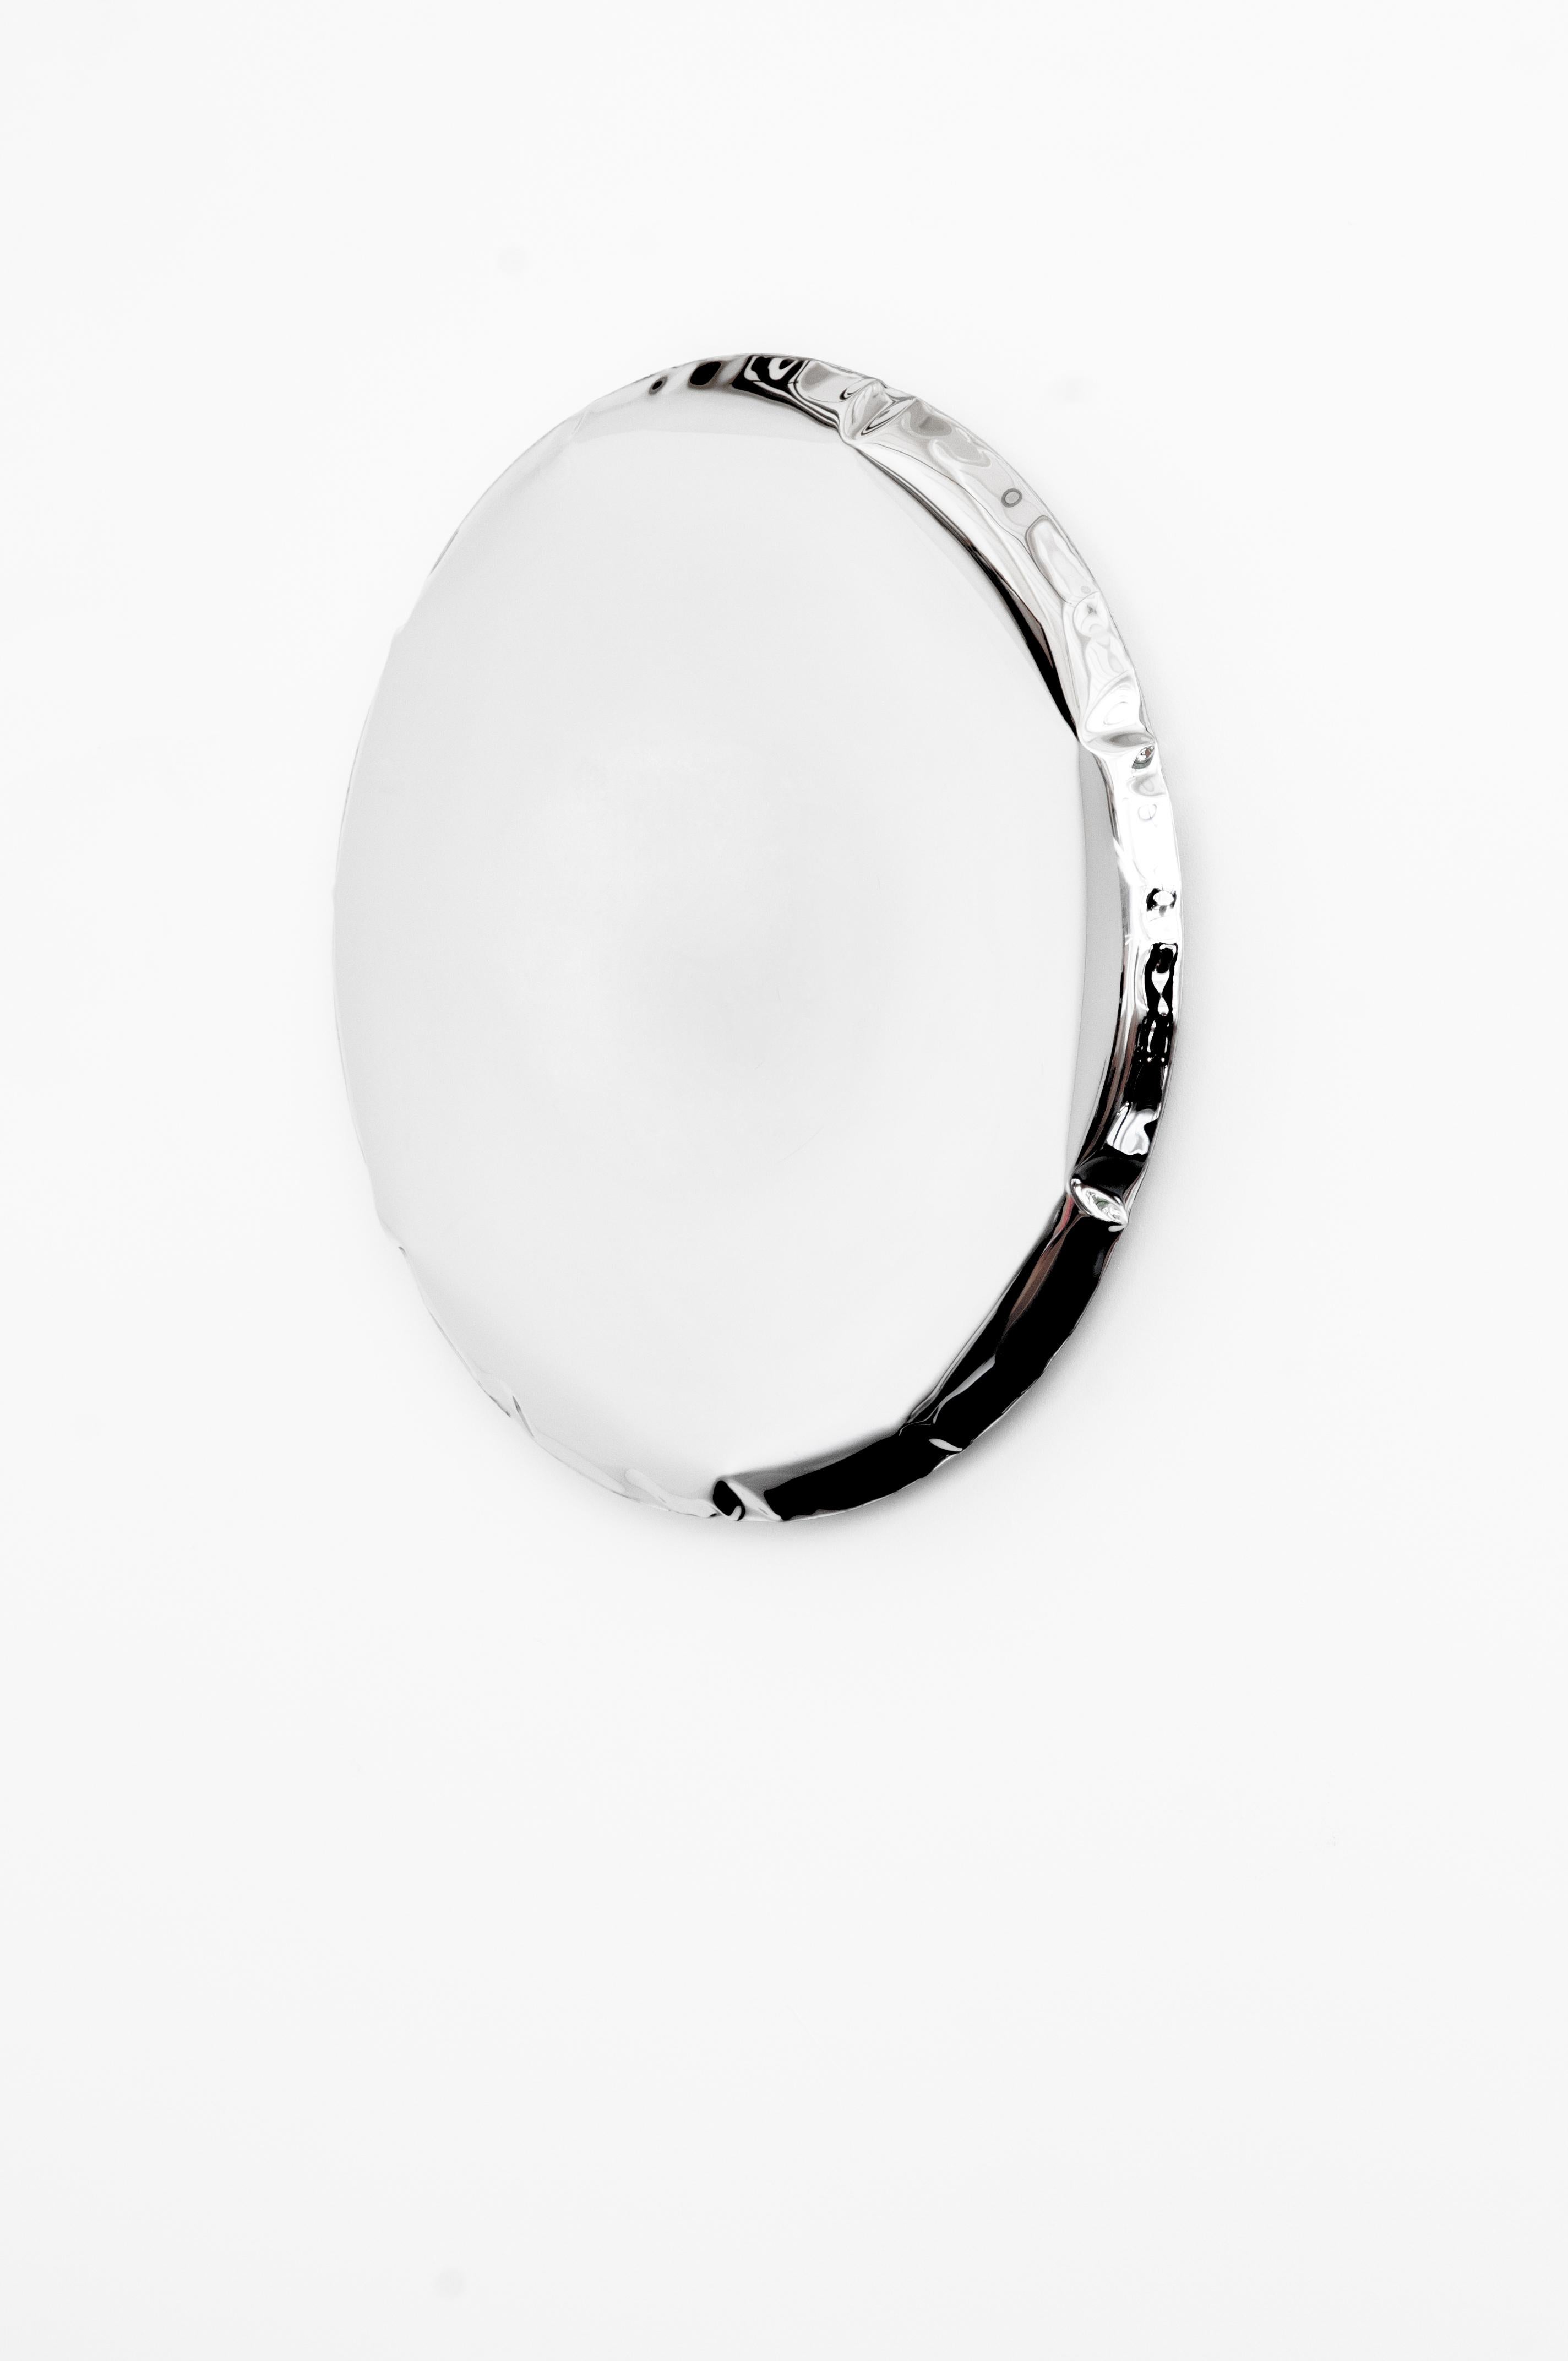 Organic Modern Mirror 'OKO 75' in Stainless Steel by Zieta, In Stock For Sale